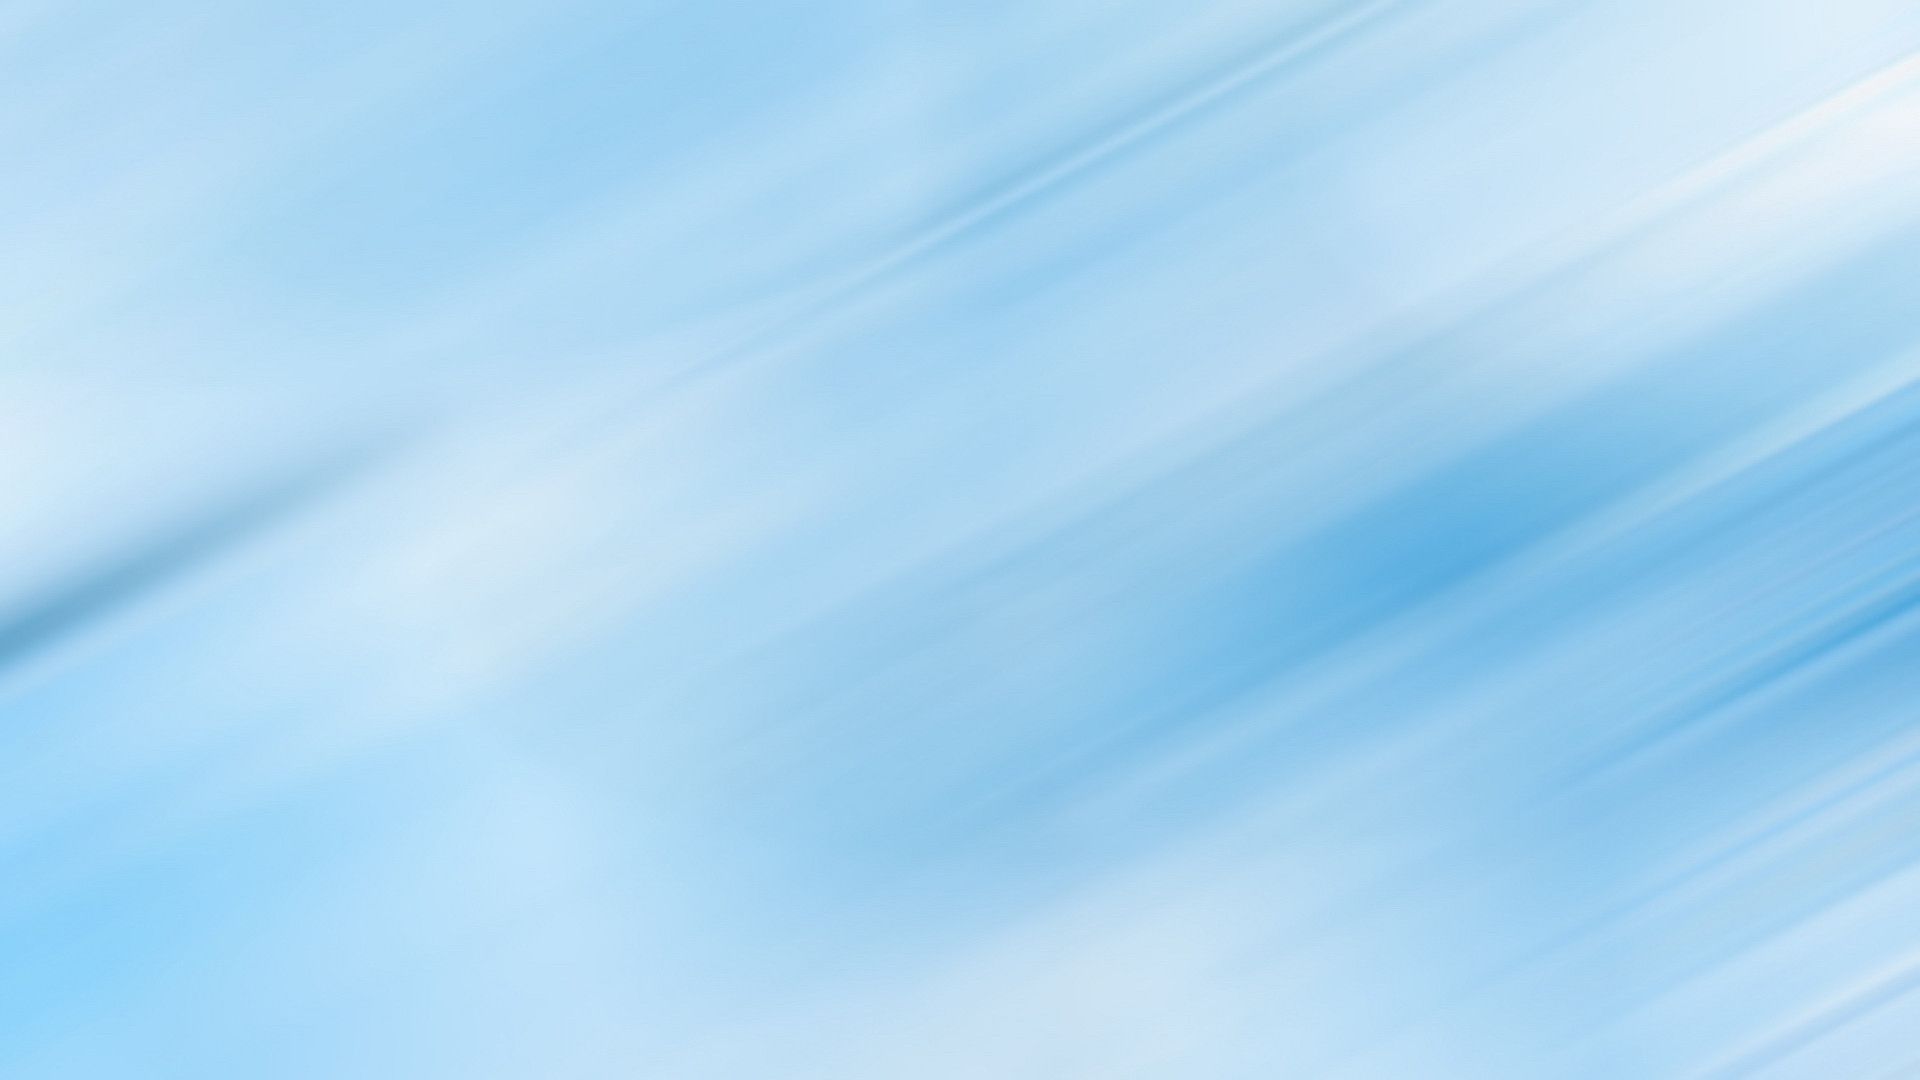 48+] Blue Sky Background Wallpaper - WallpaperSafari